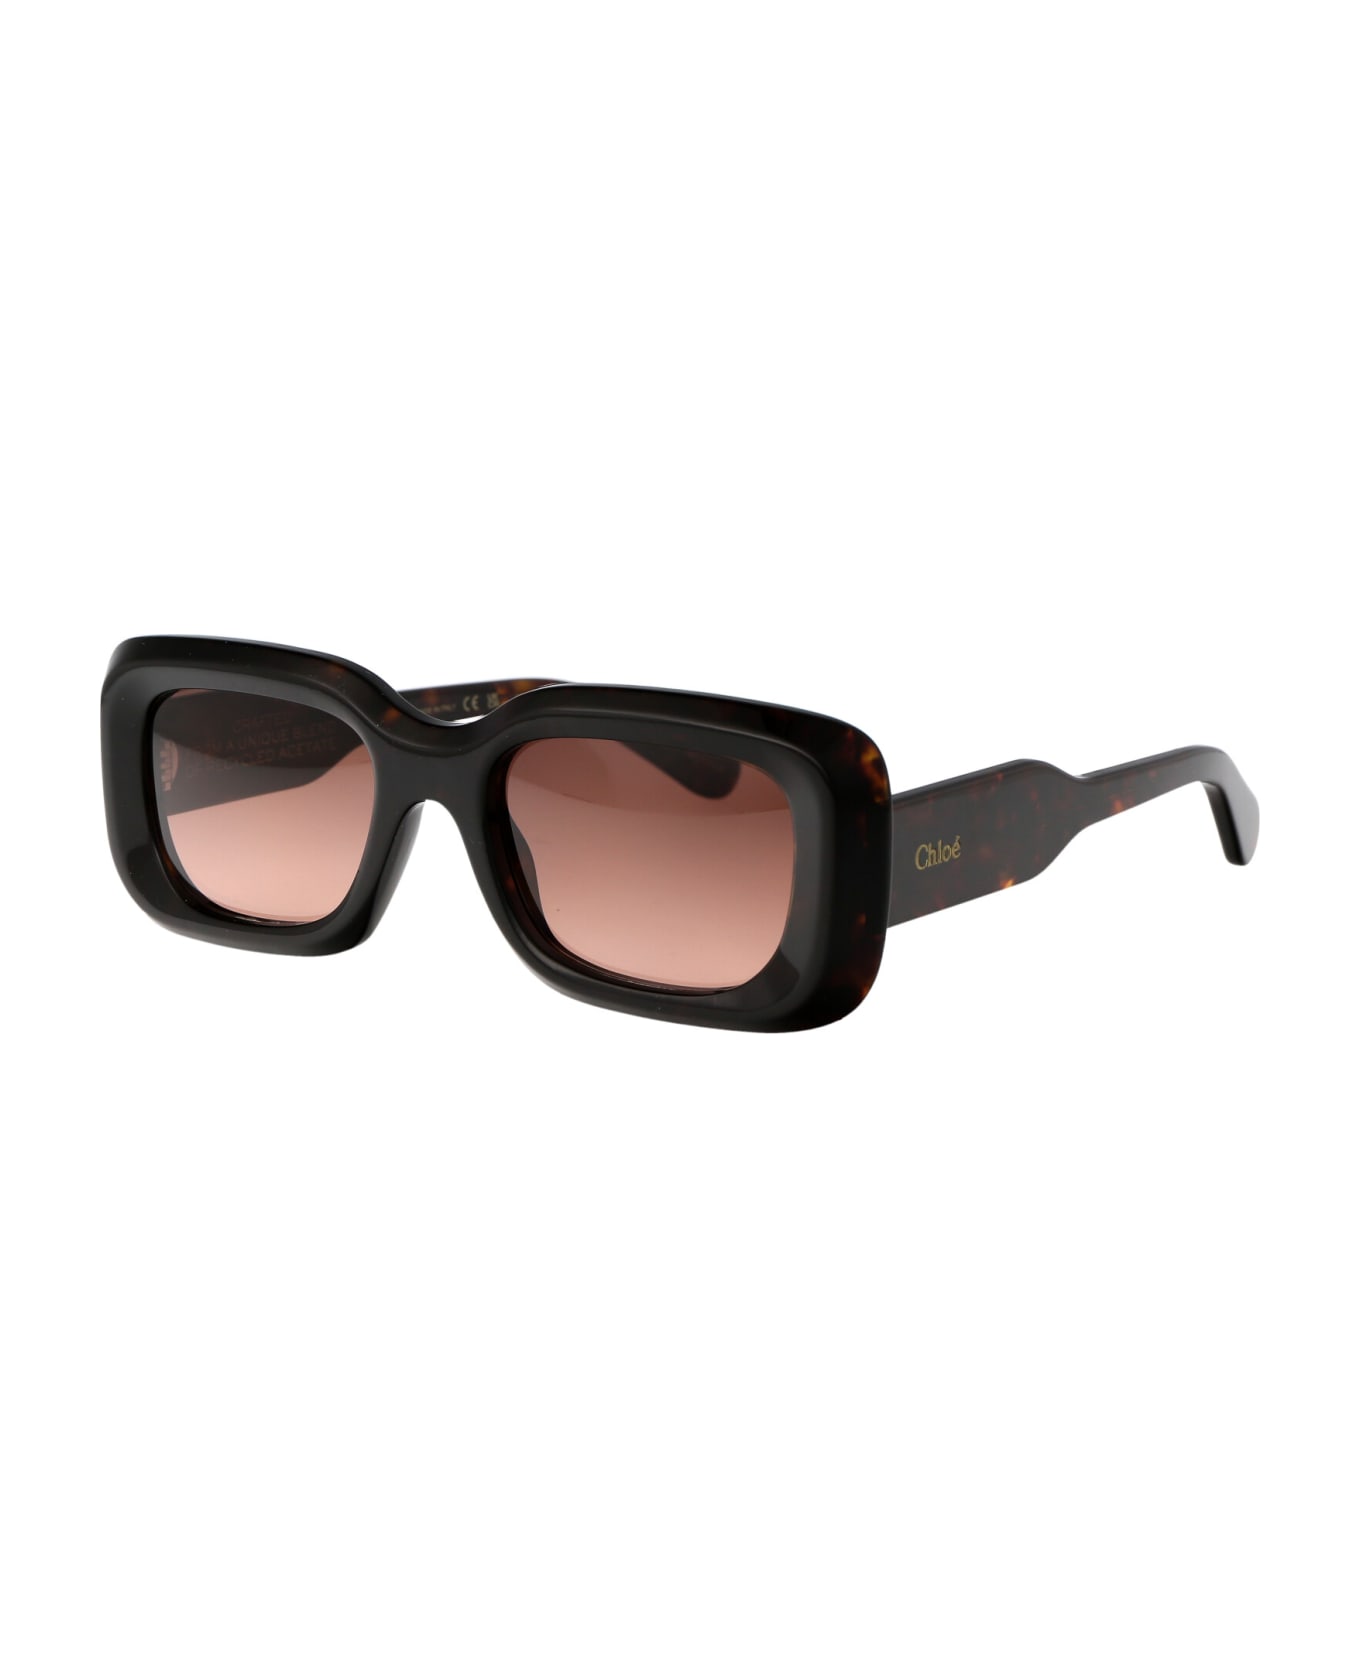 Chloé Eyewear Ch0188s Sunglasses - 002 HAVANA HAVANA COPPER サングラス